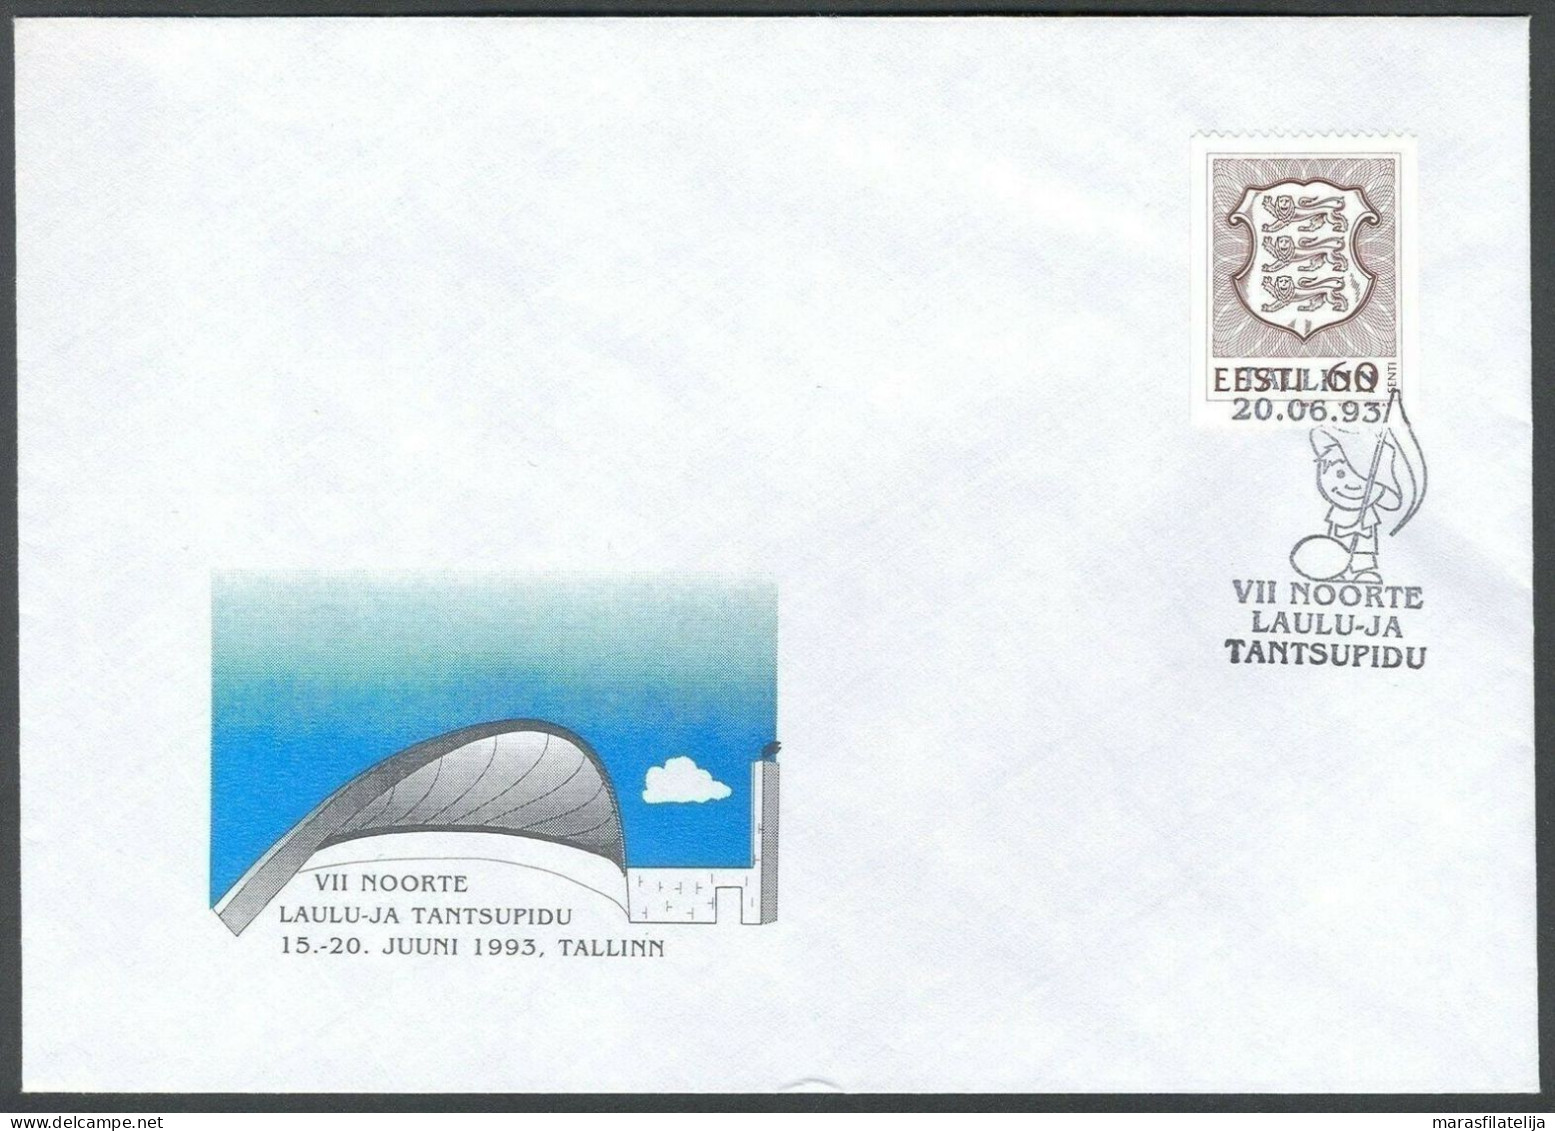 Estonia 1993, Music Festival, Special Postmark & Cover - Estland